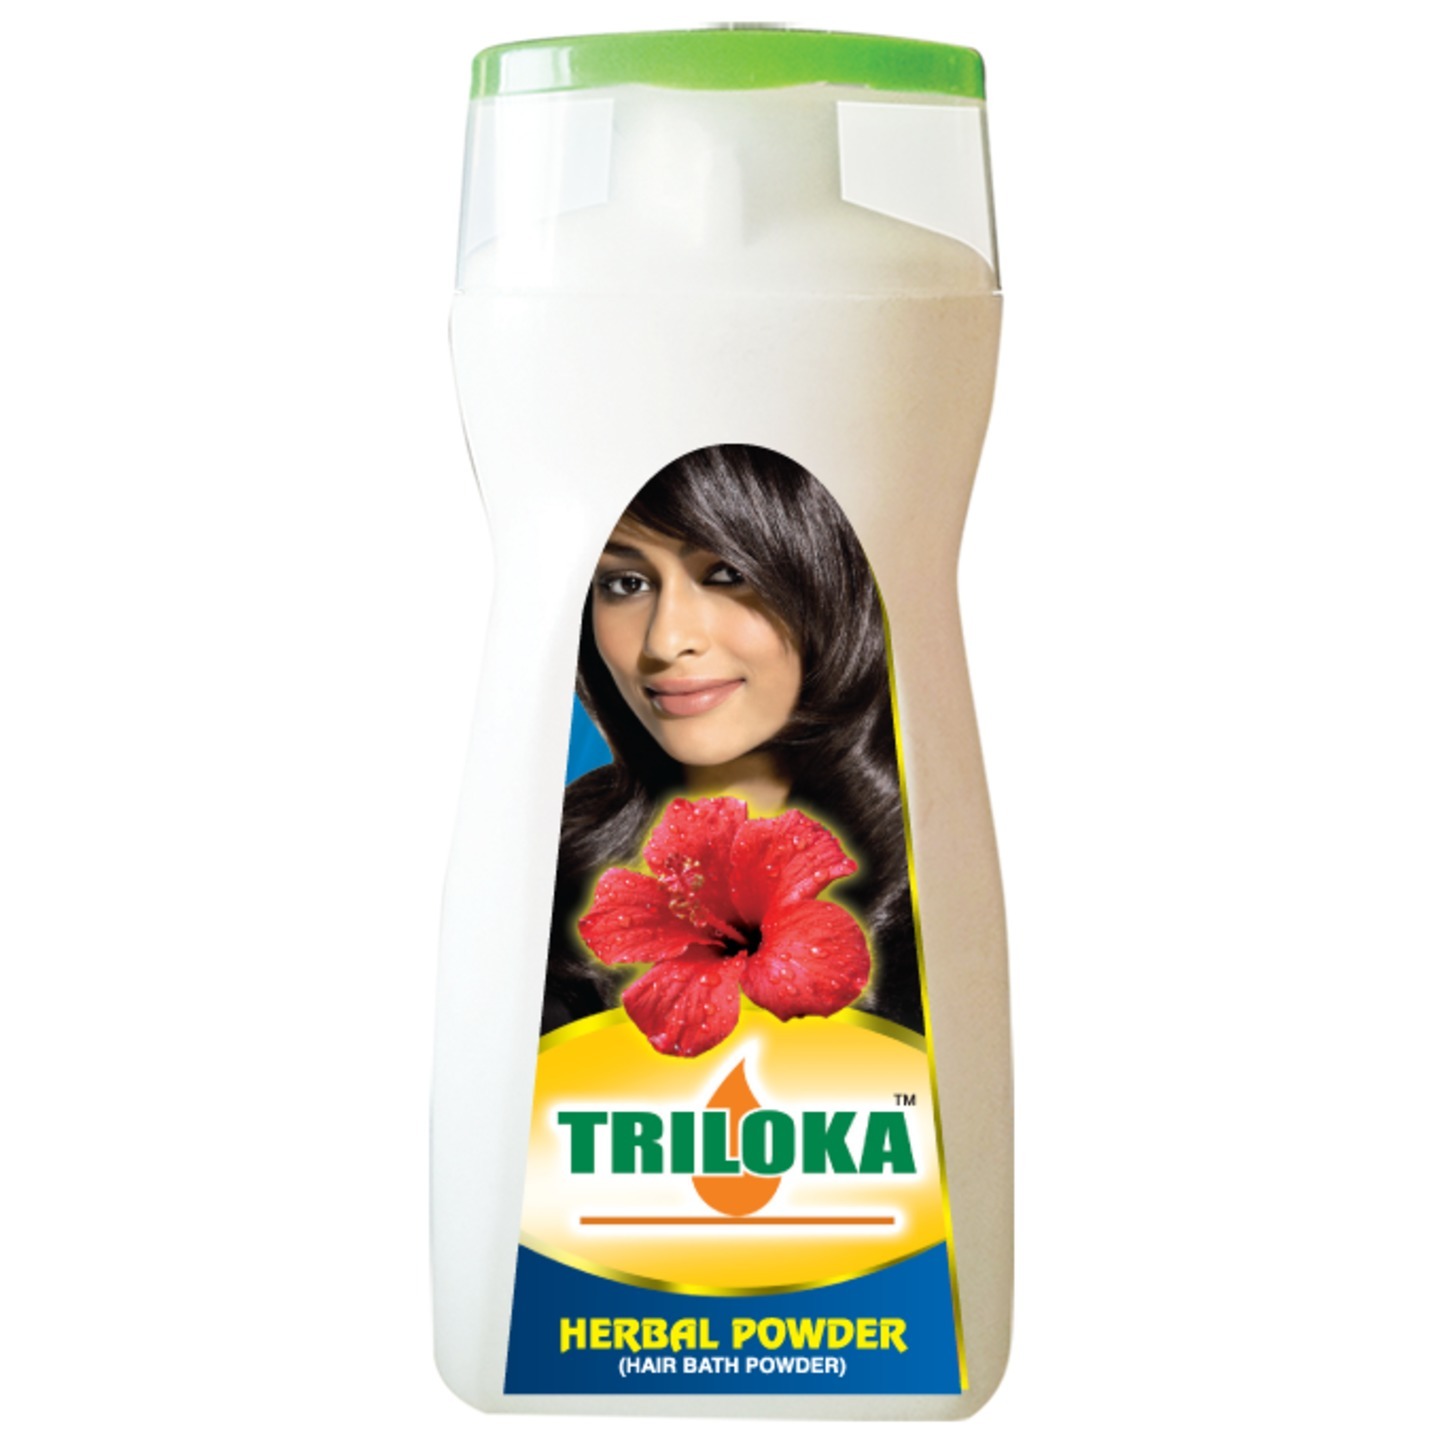 New Triloka HerbalMandara HairHead Bathing Powder